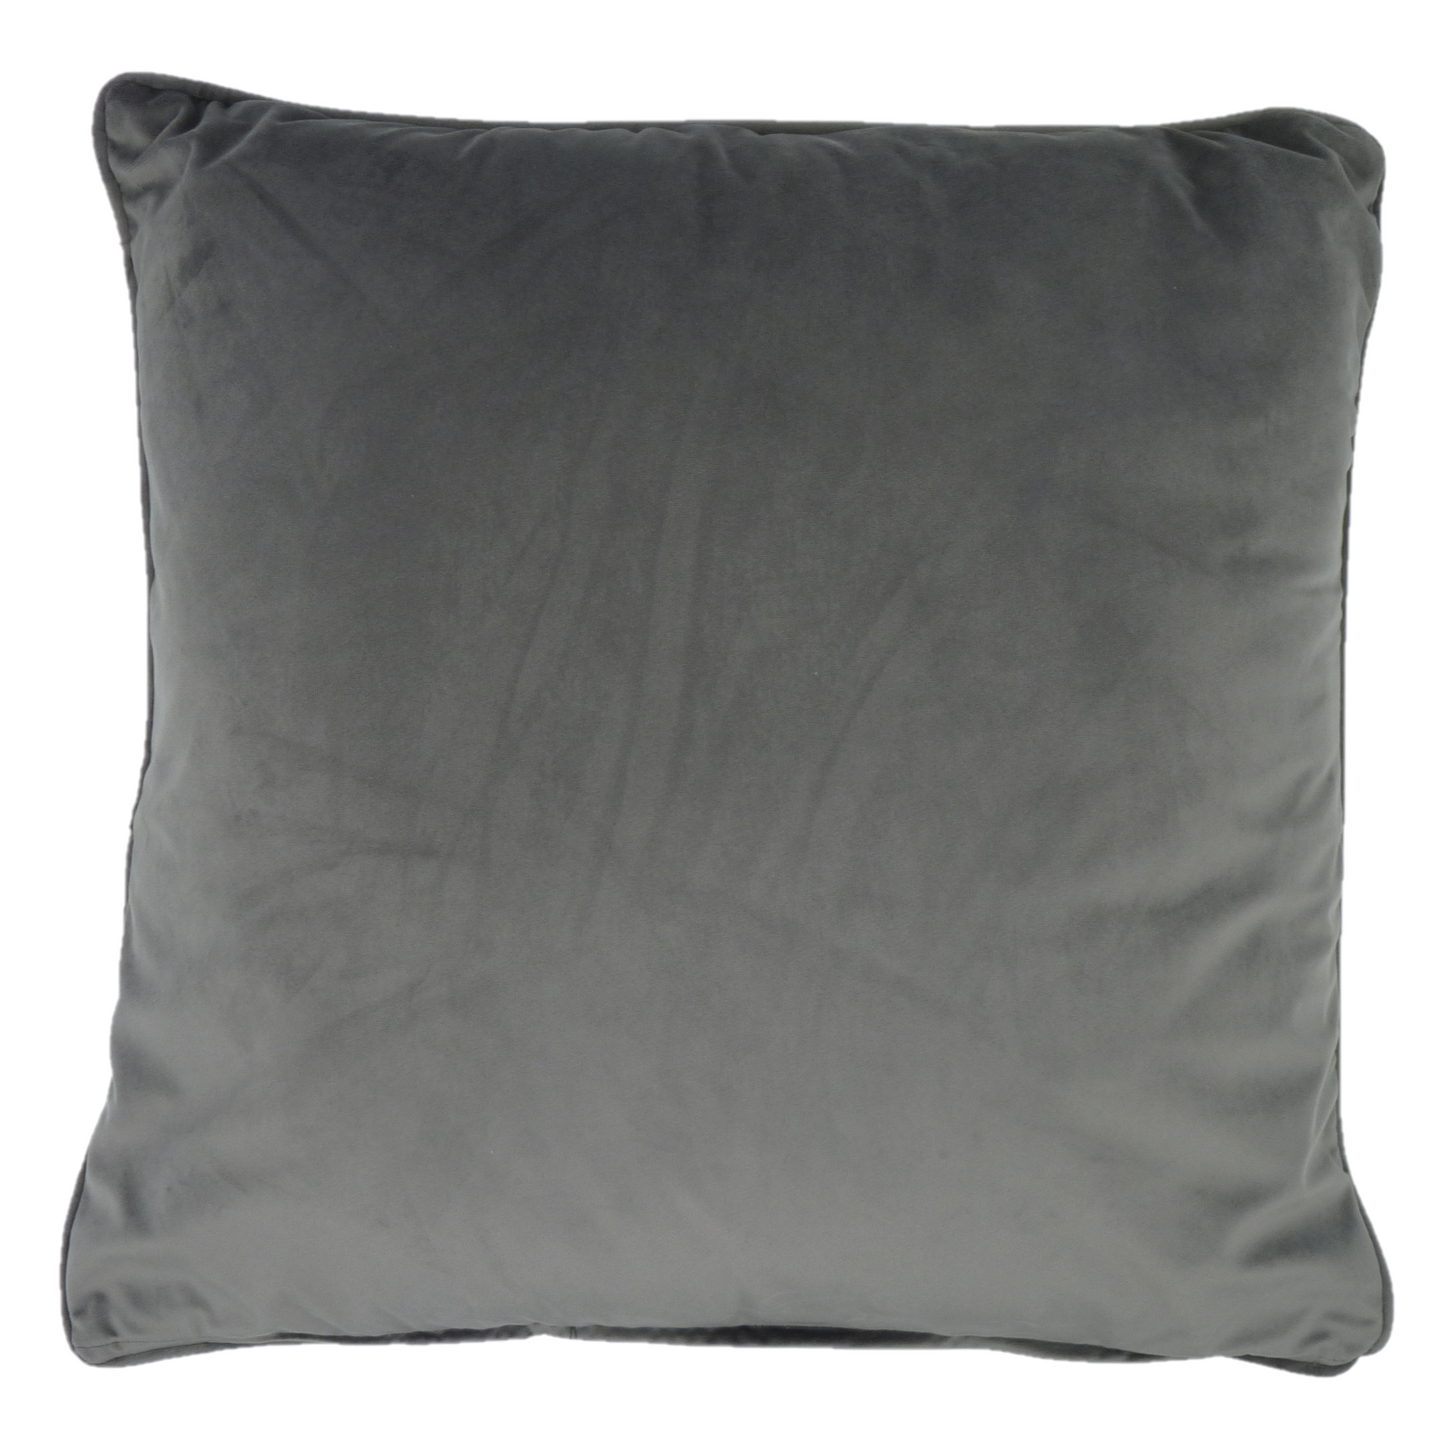 Recco Dove Grey Velvet Geometric Cushion Cover (55cm x 55cm)